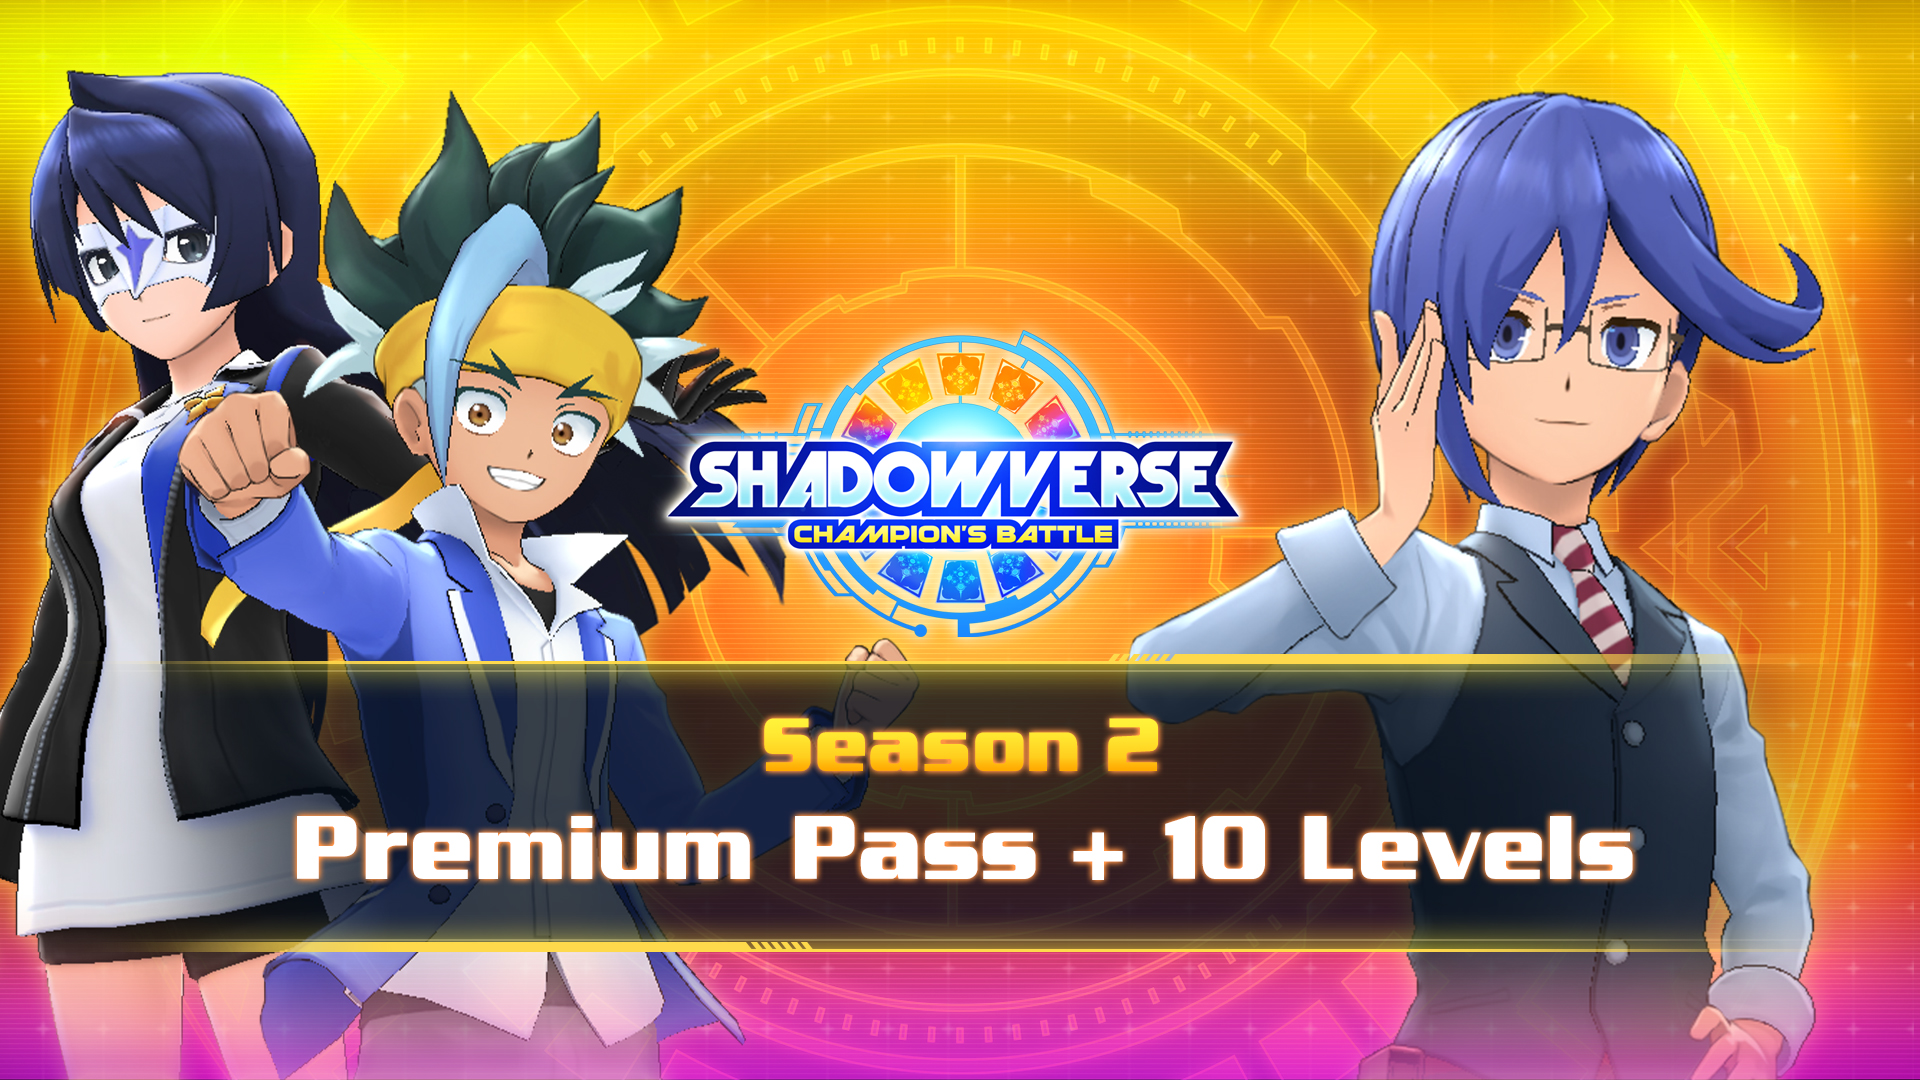 Season 2 Premium Pass + 10 Levels